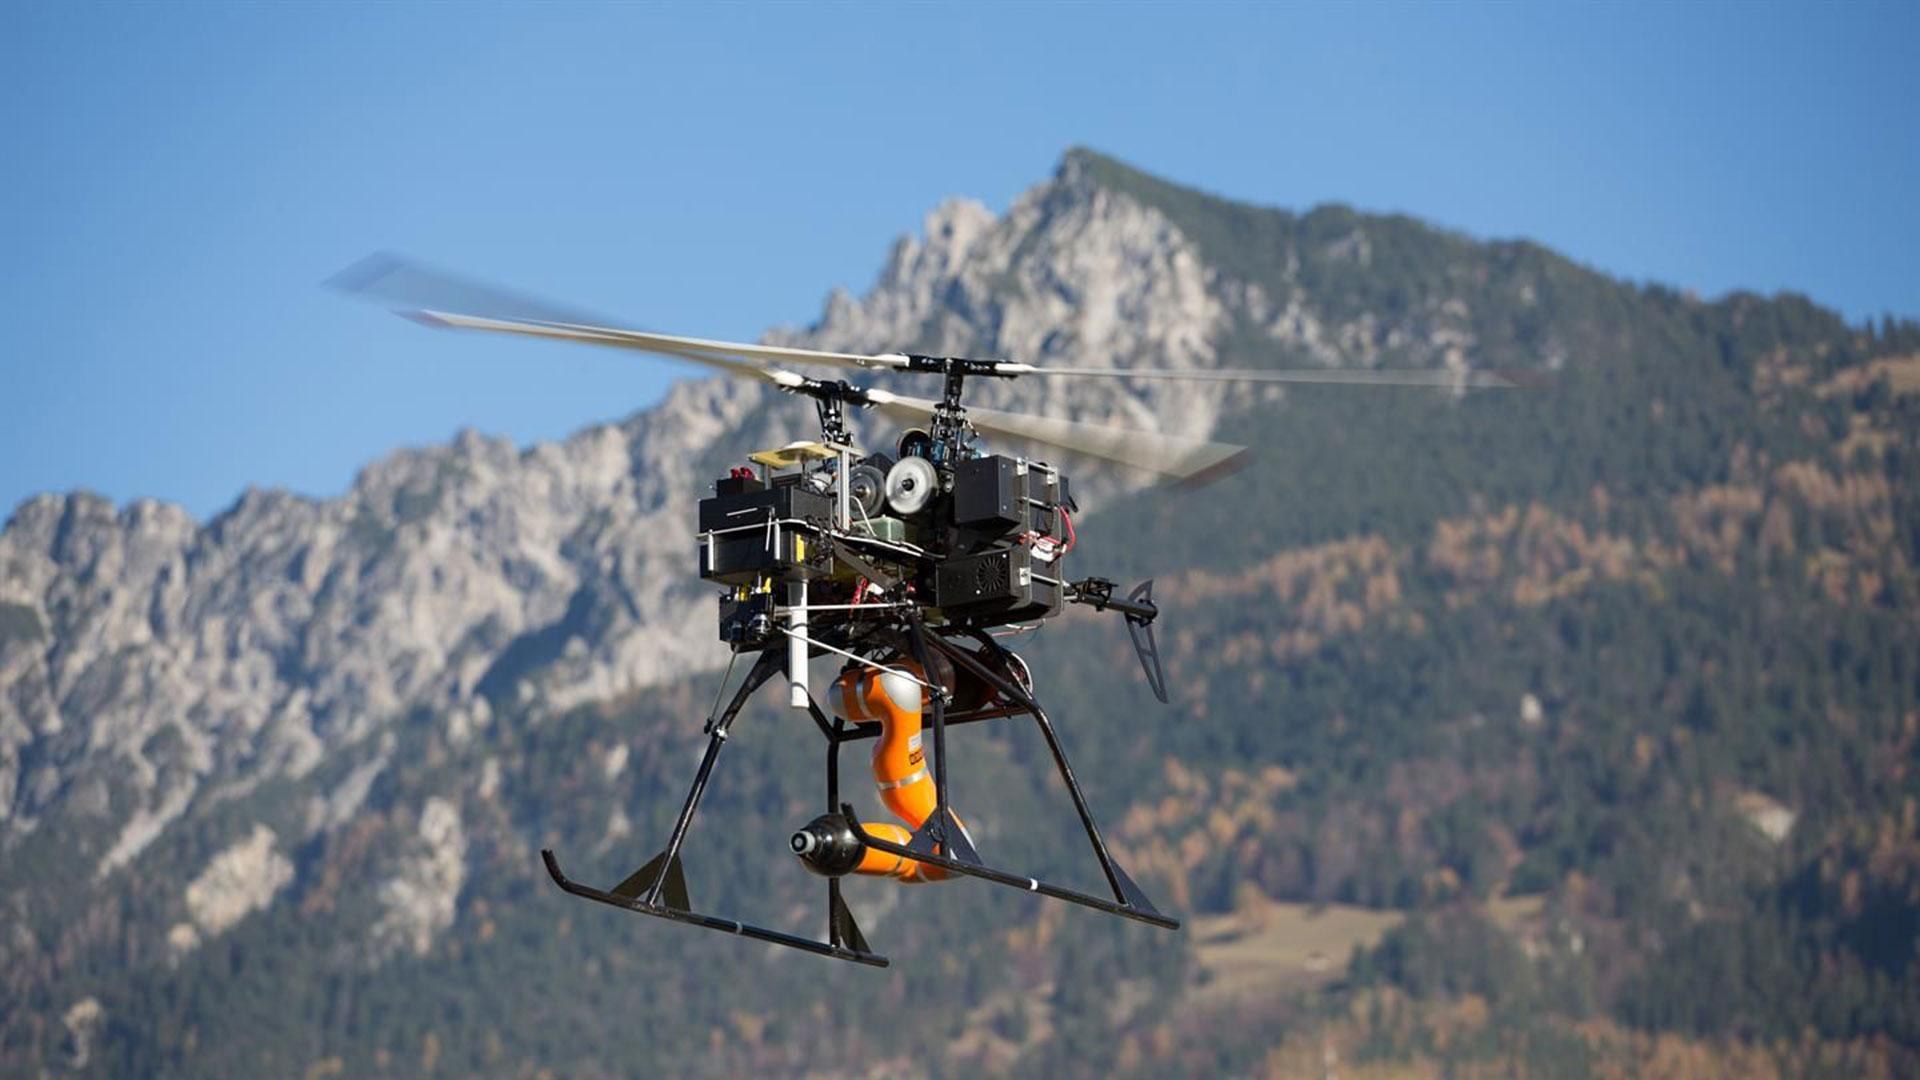 DLR Flight Robots: Robotic Technologies for Airborne Applications